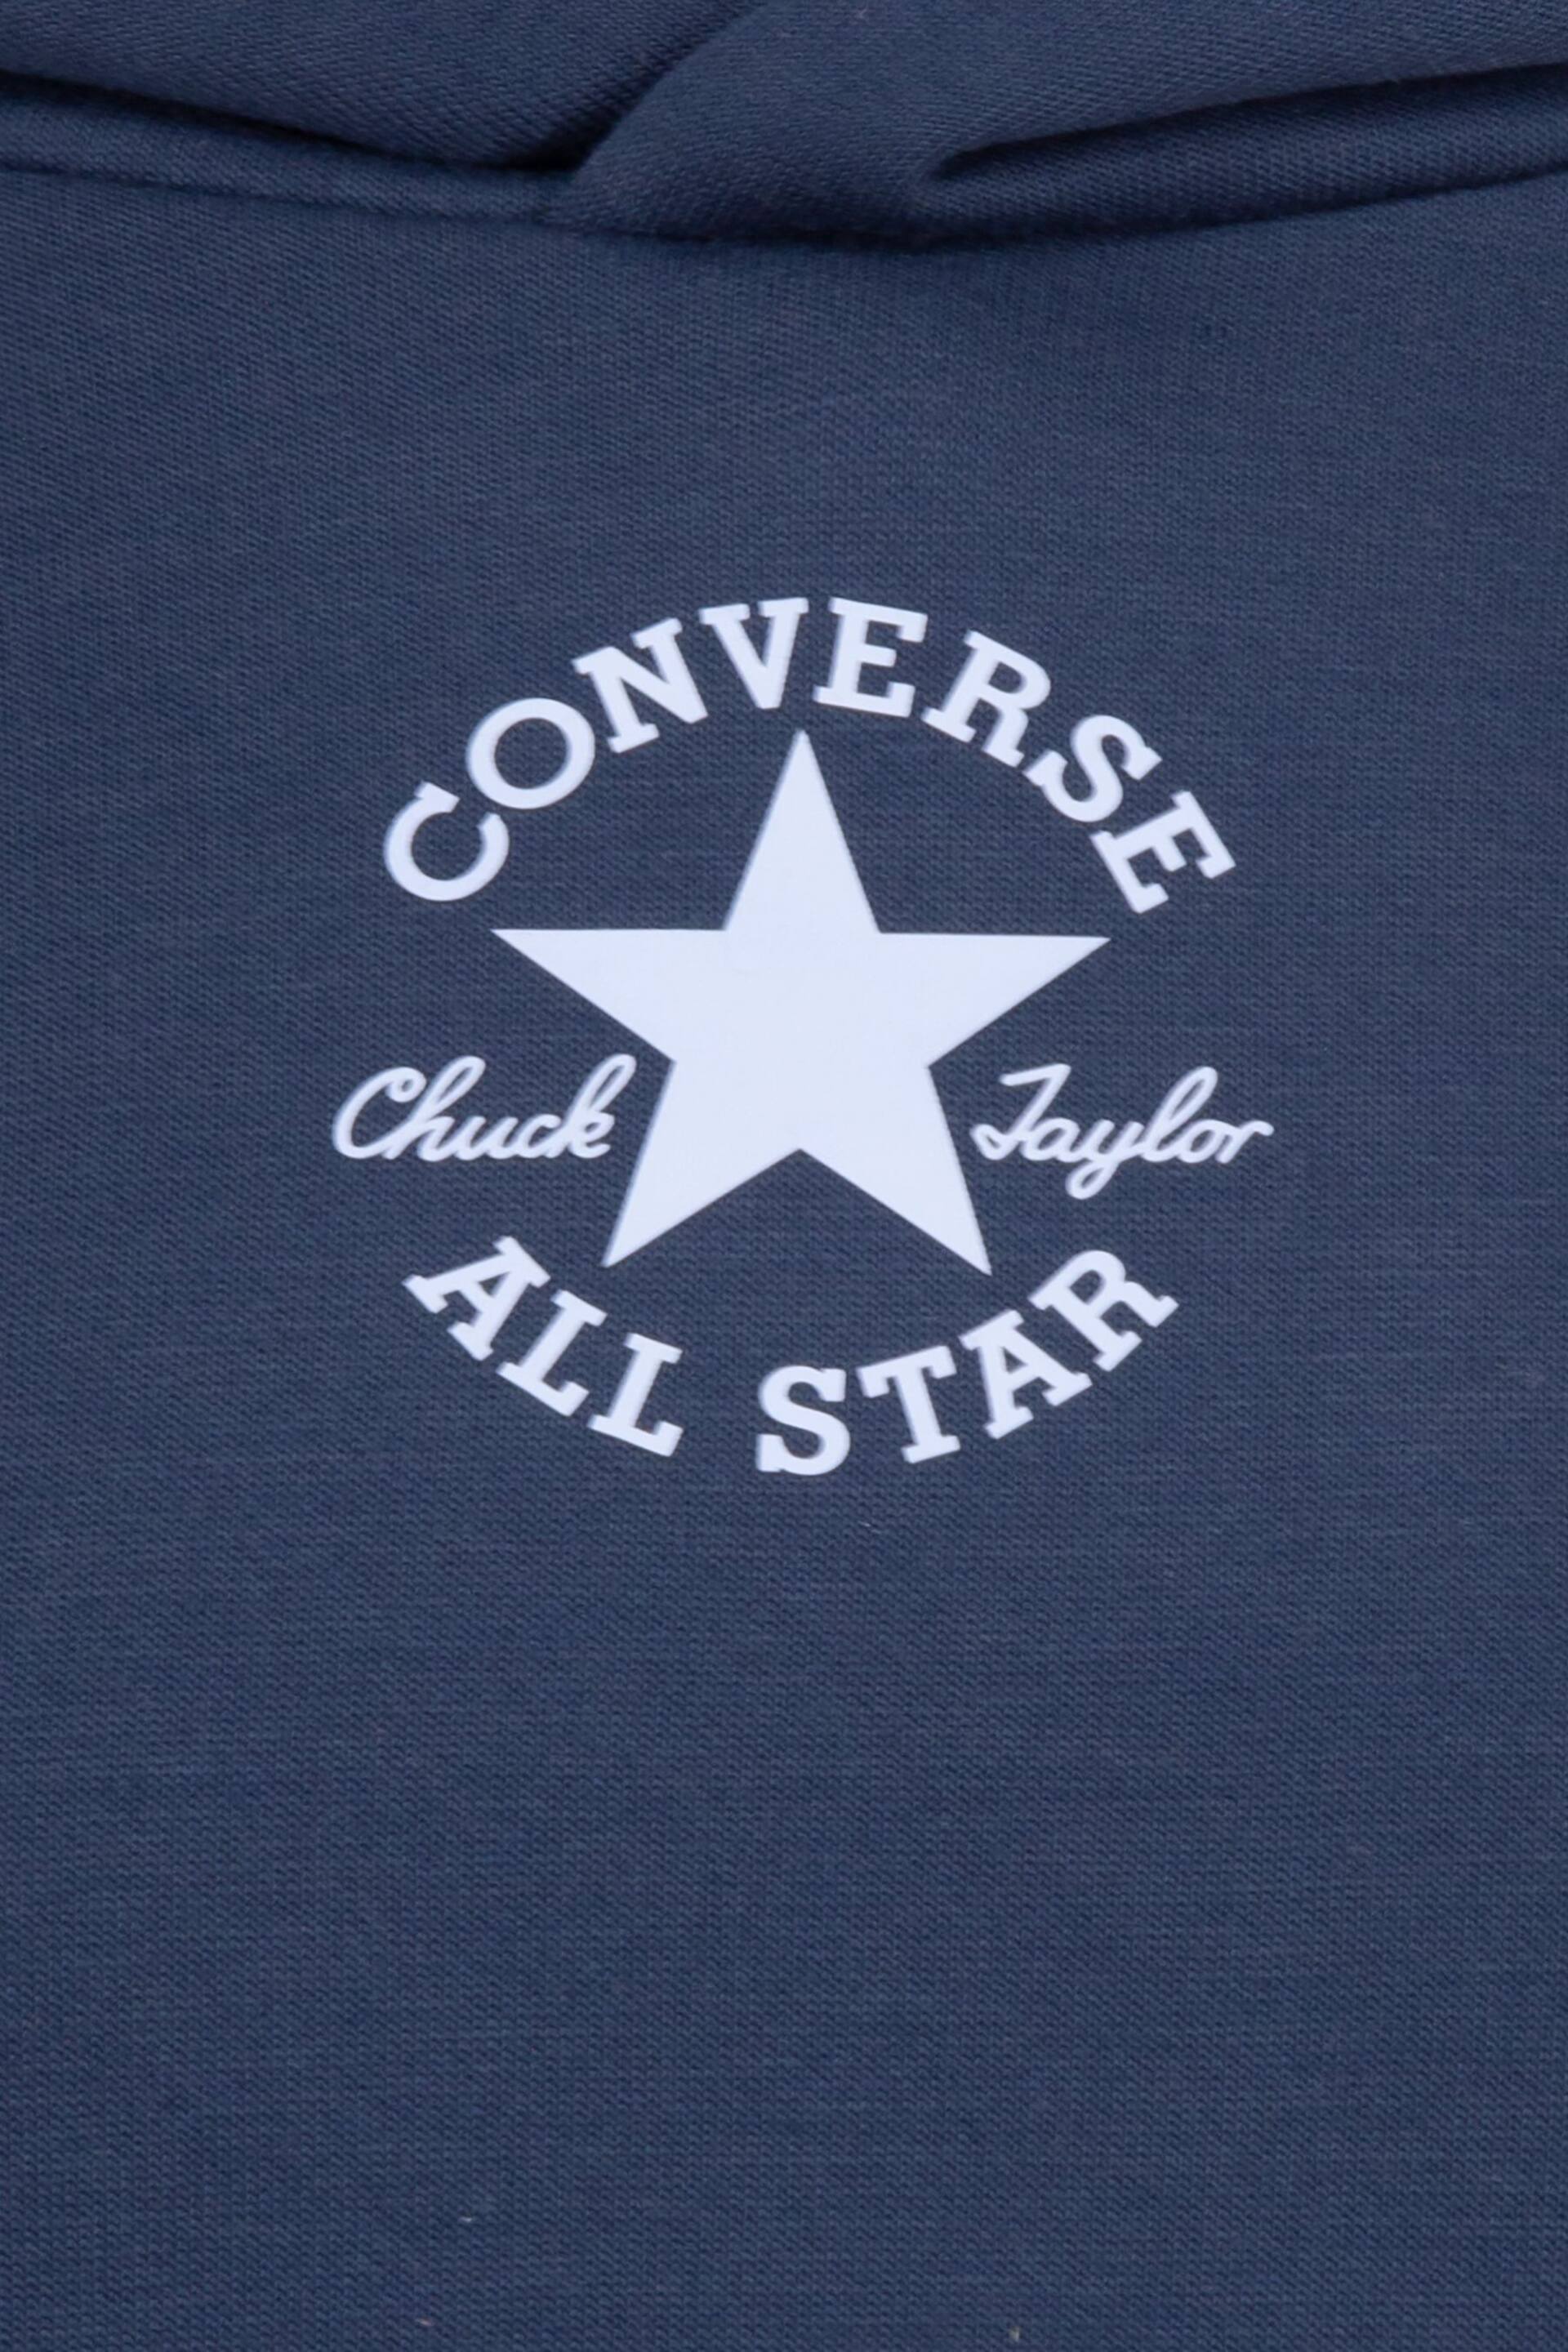 Converse Navy Logo Hoodie - Image 4 of 4